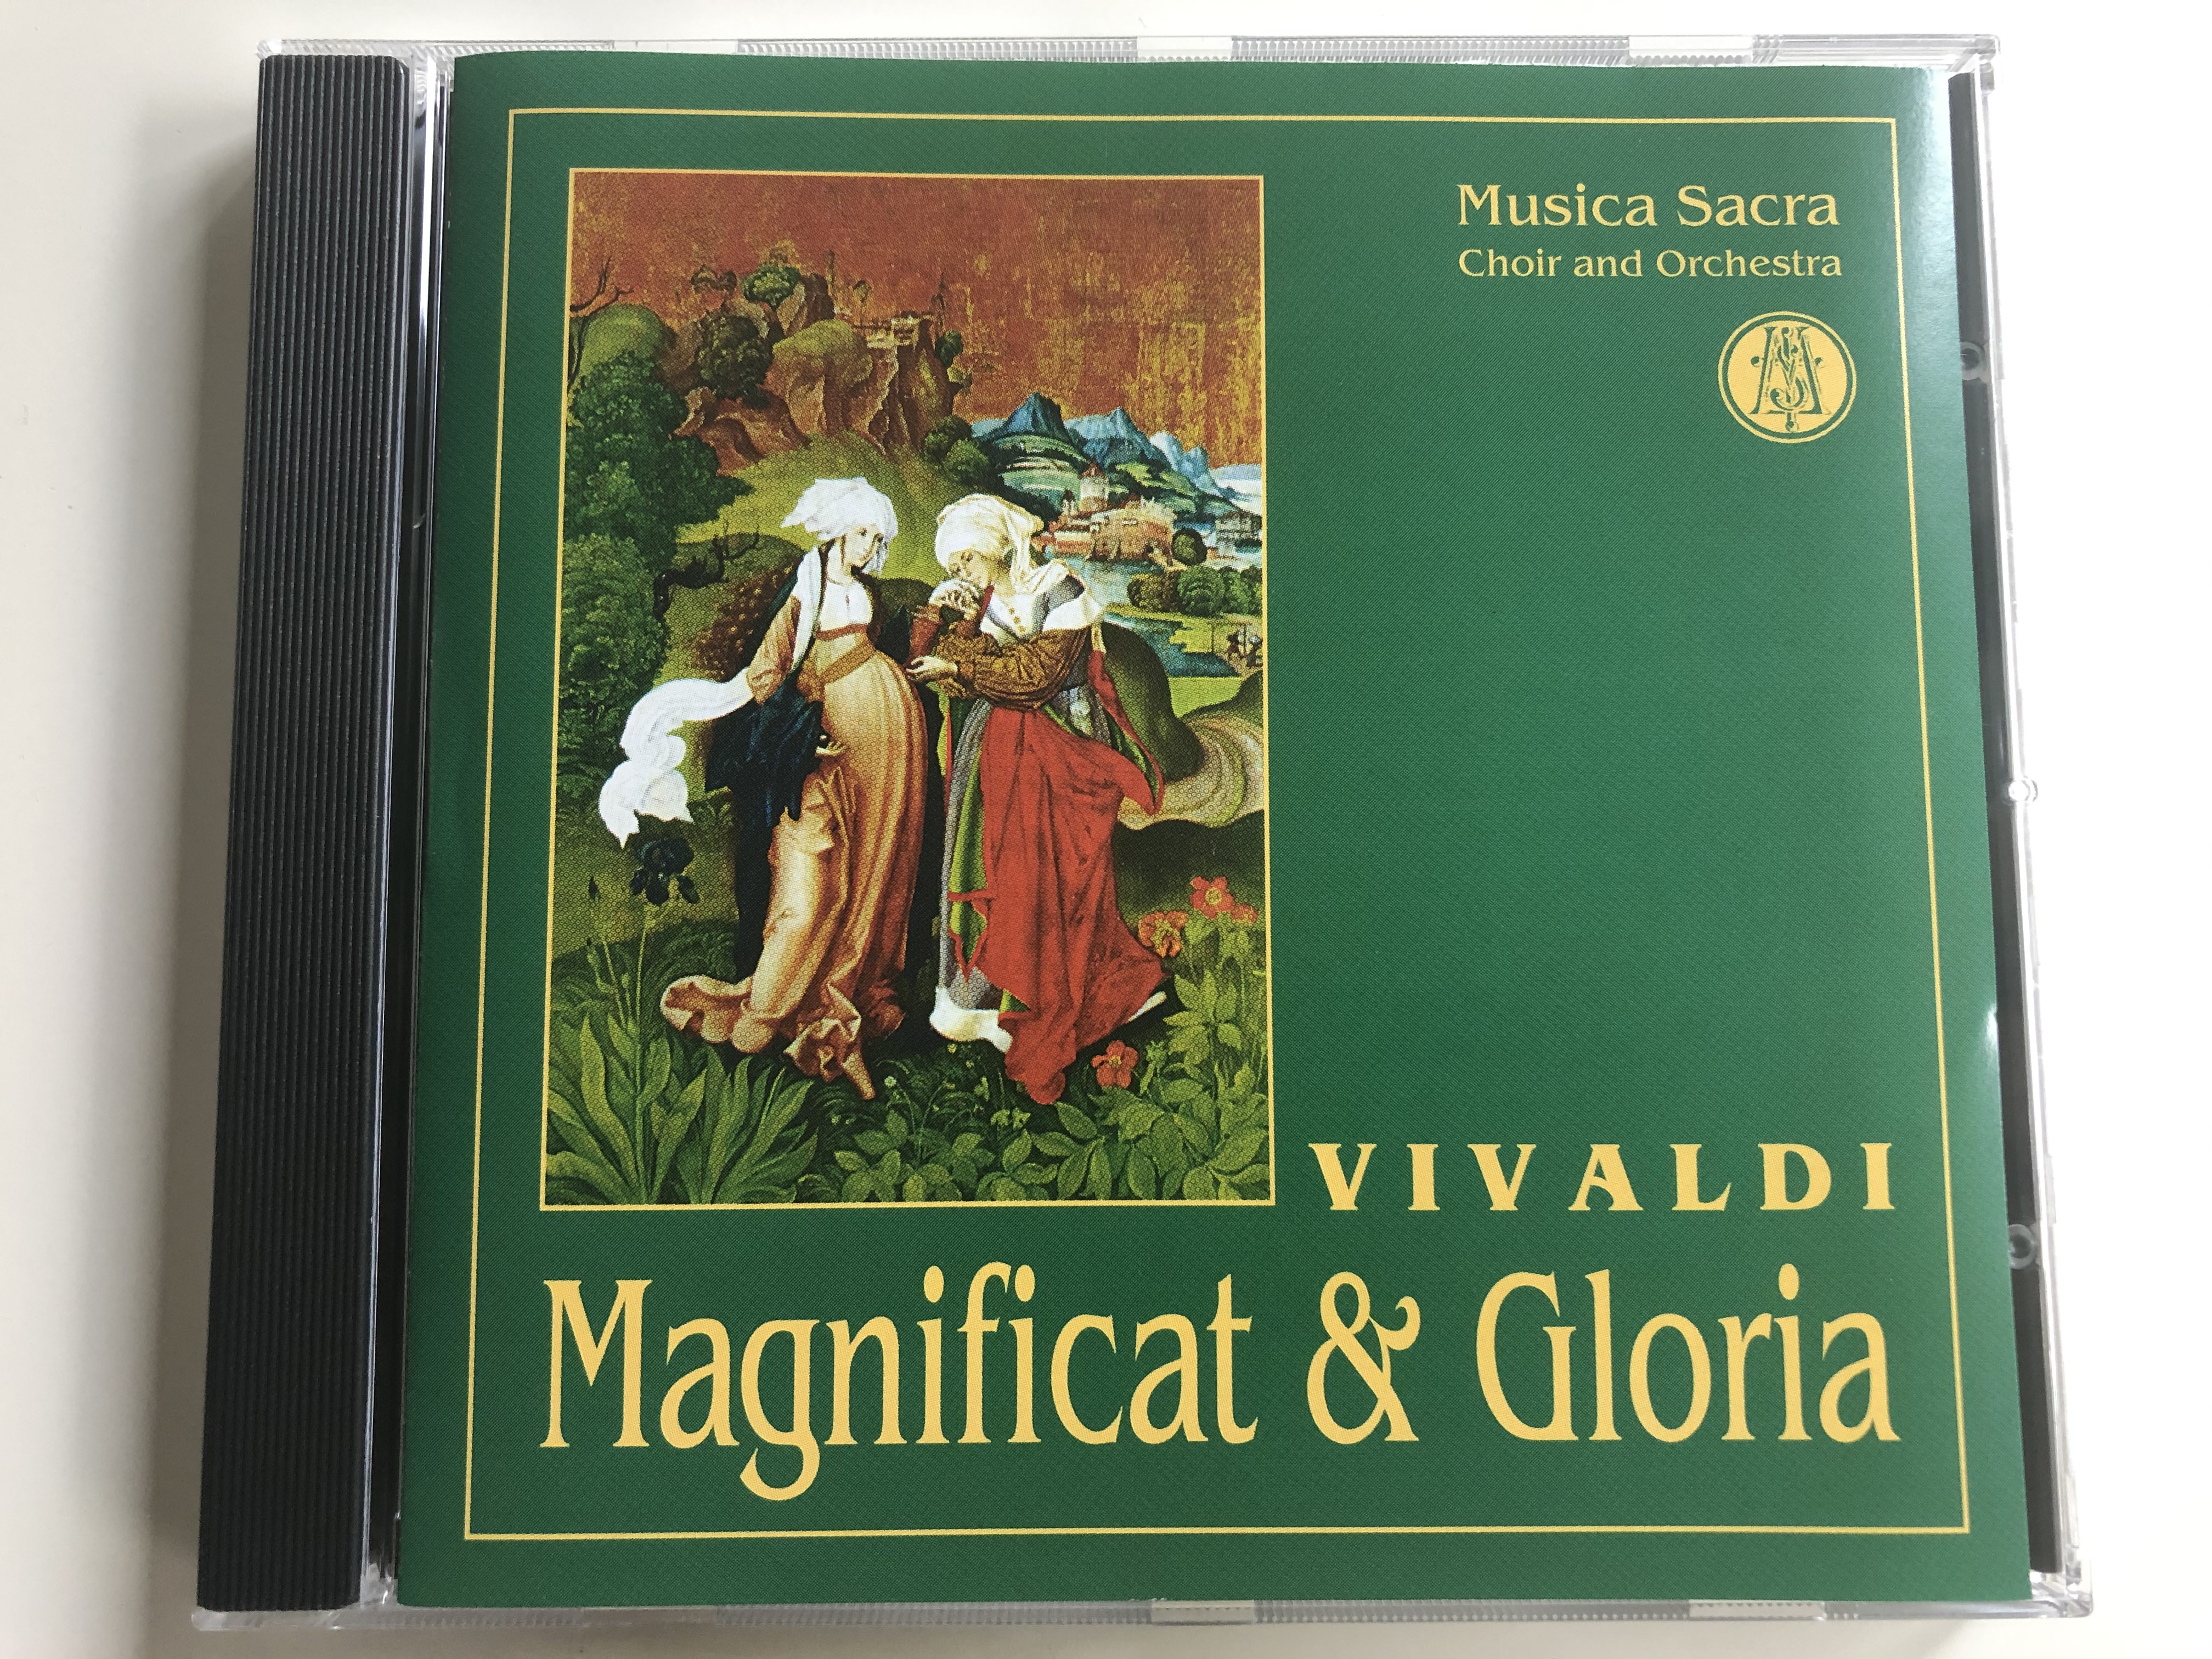 vivaldi-magnificat-gloria-musica-sacra-choir-and-orchestra-allegro-audio-cd-1998-stereo-mza-032-1-.jpg